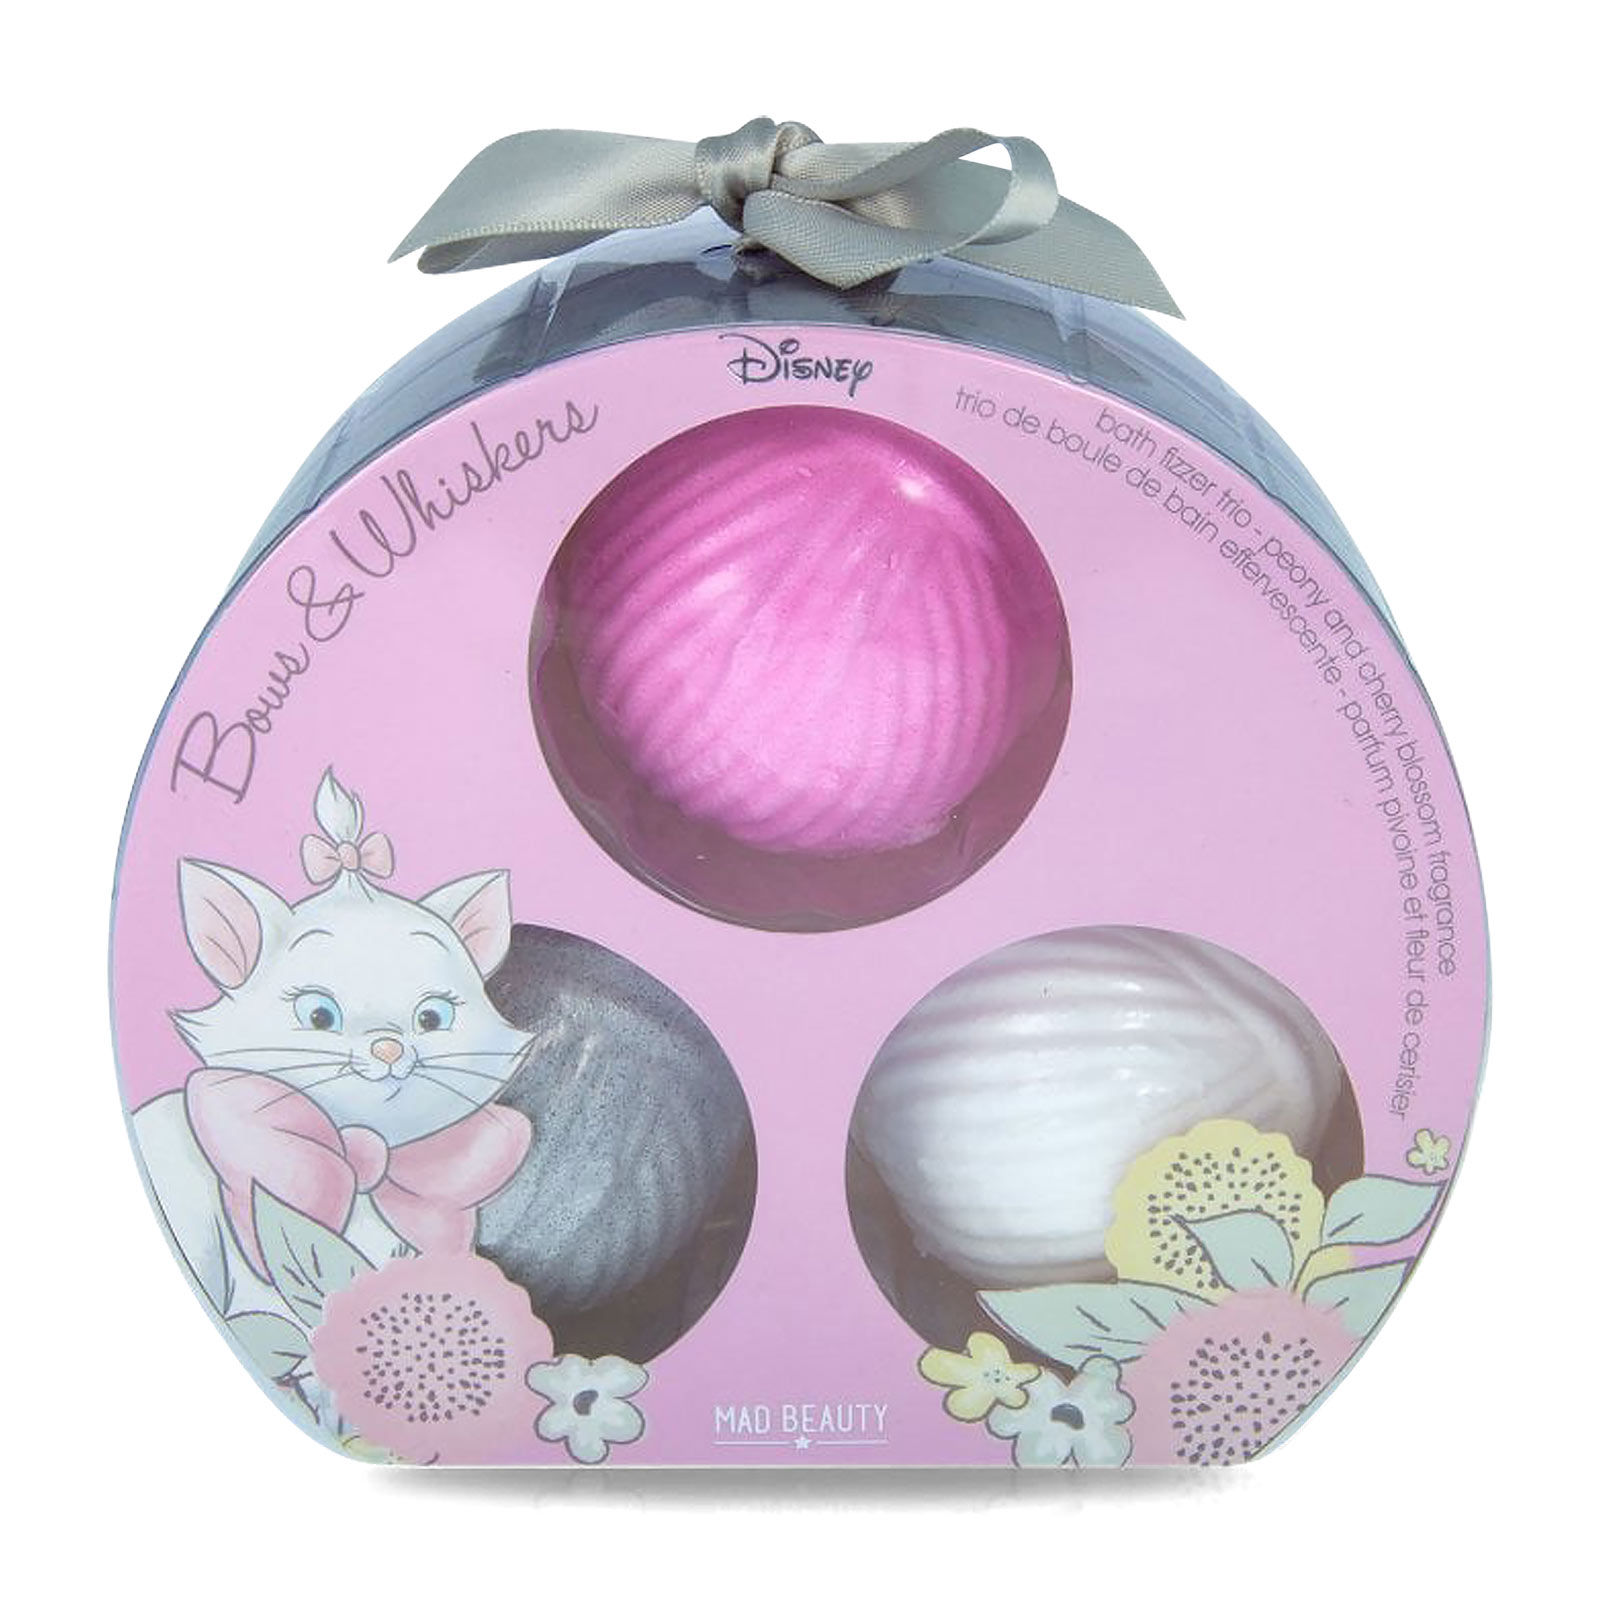 Aristocats - Marie wool balls bath bombs set of 3